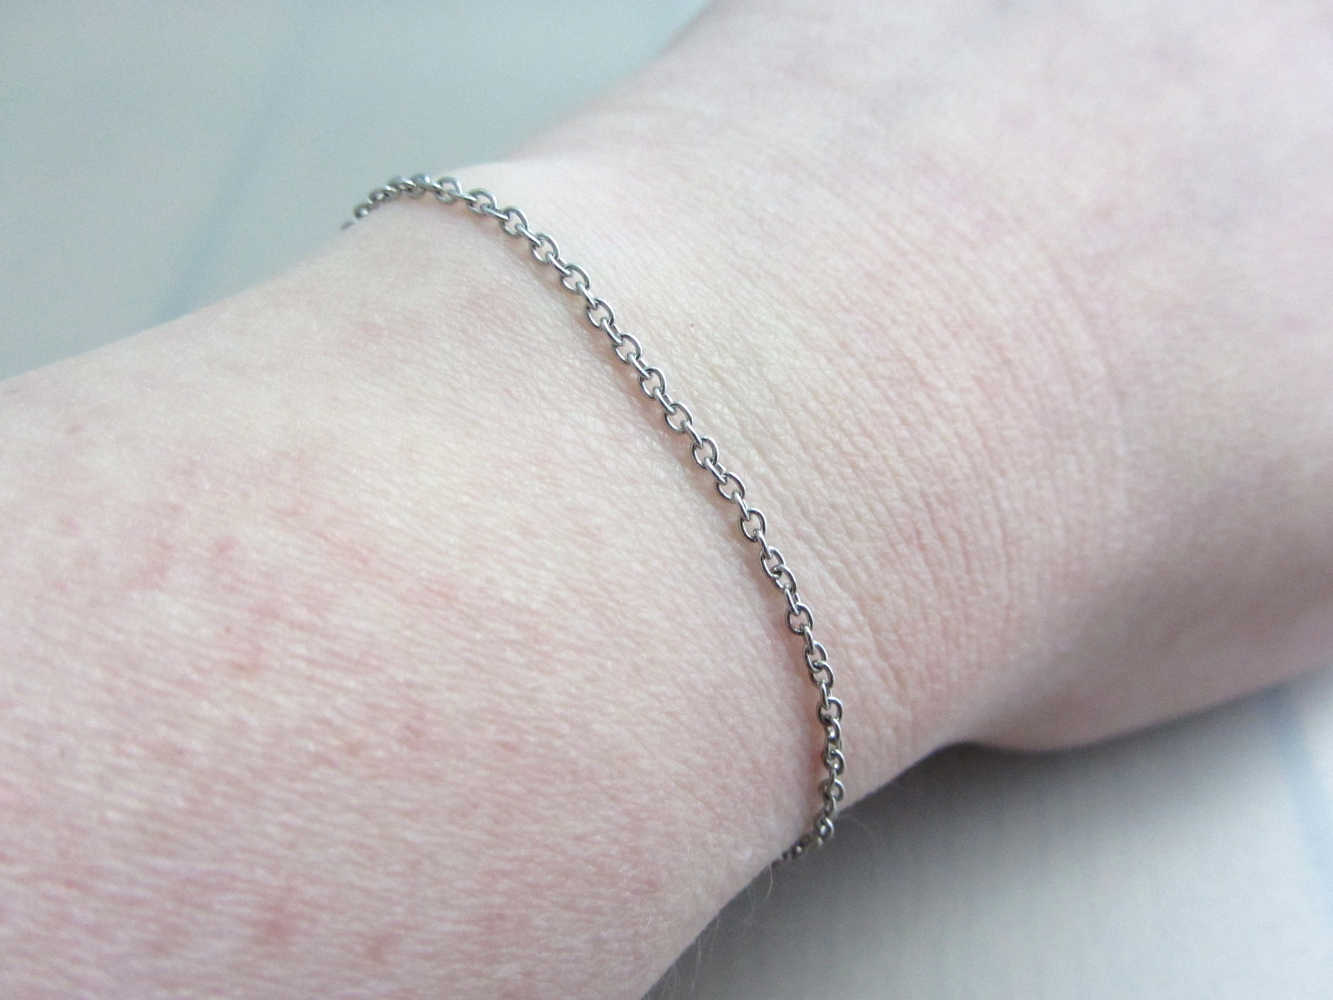 dainty stainless steel chain bracelet on wrist